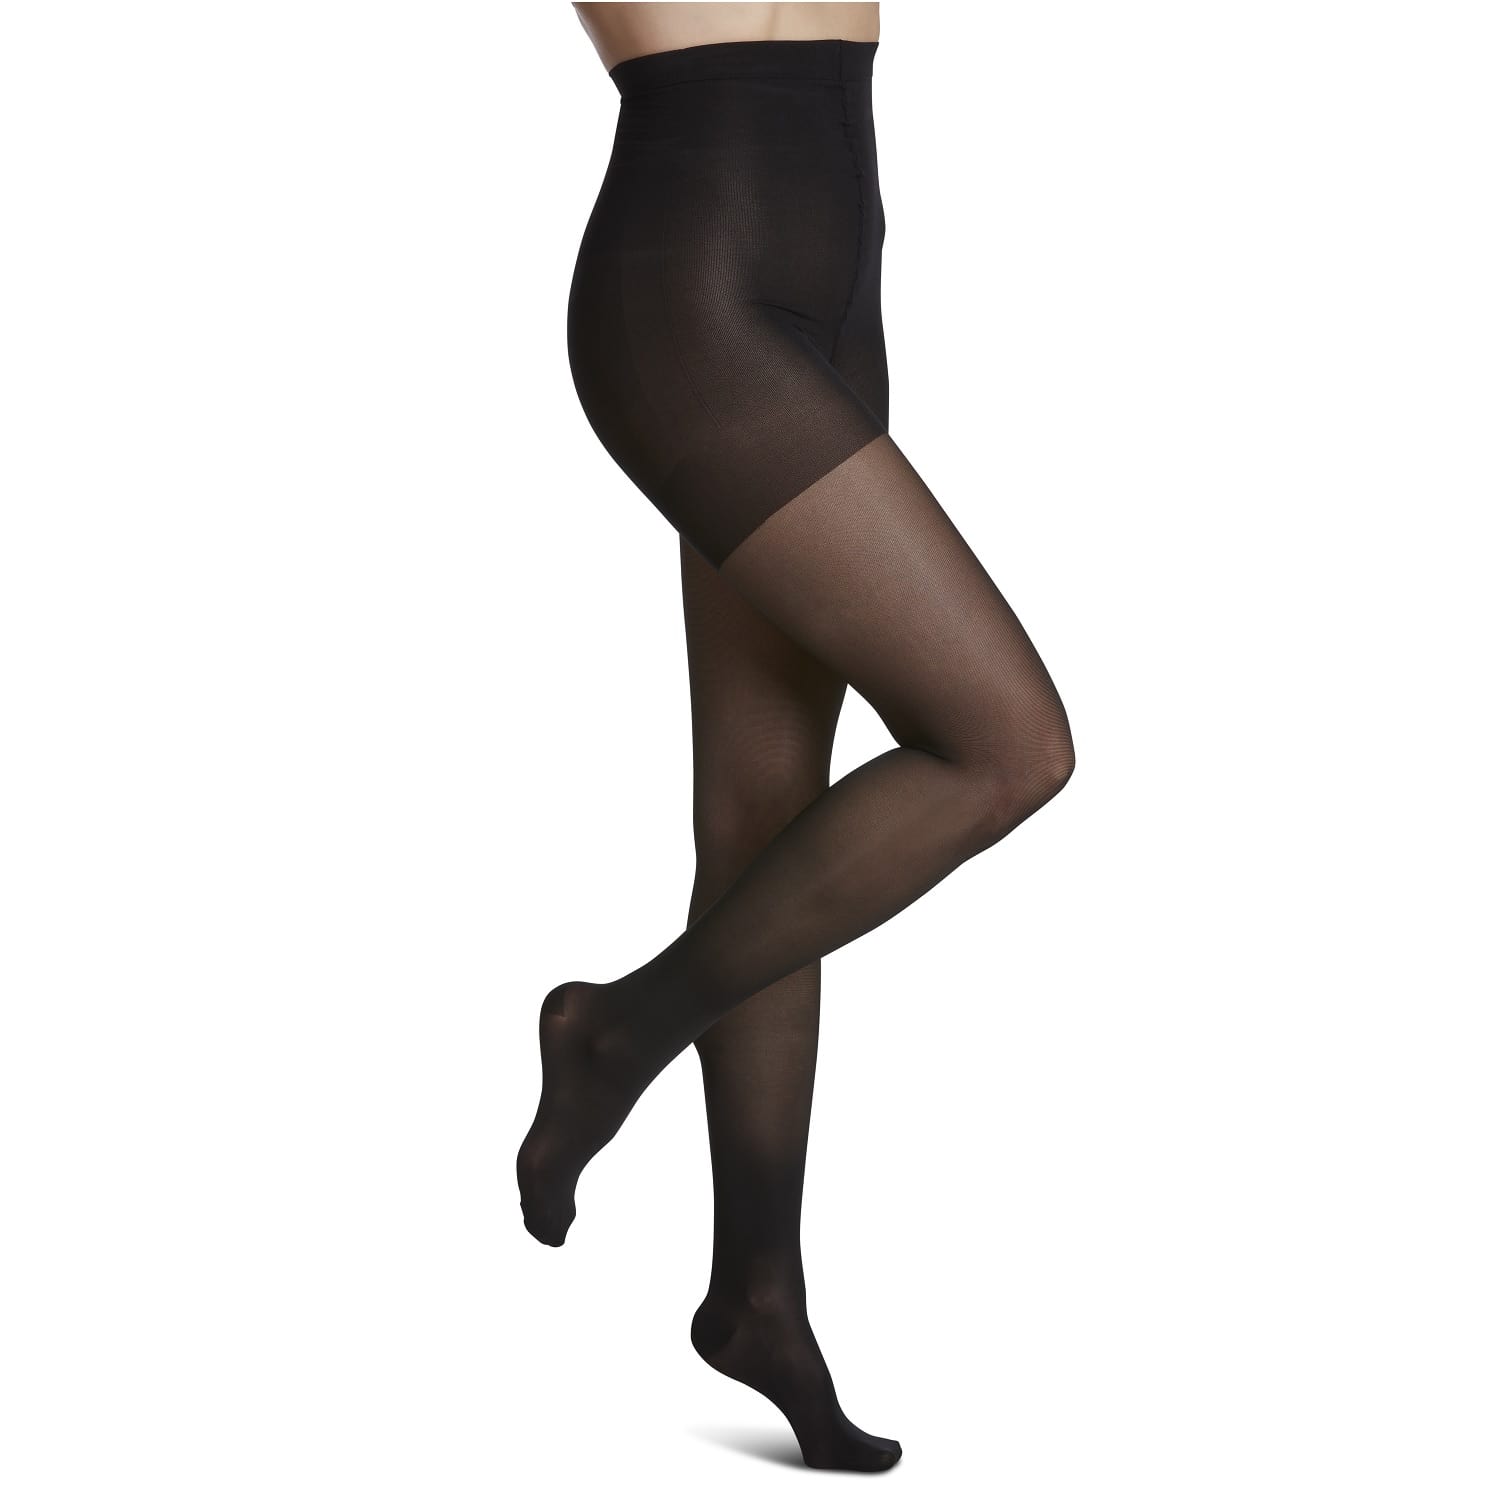 Sigvaris Women's Sheer Pantyhose Compression Stockings 15-20 mmHg